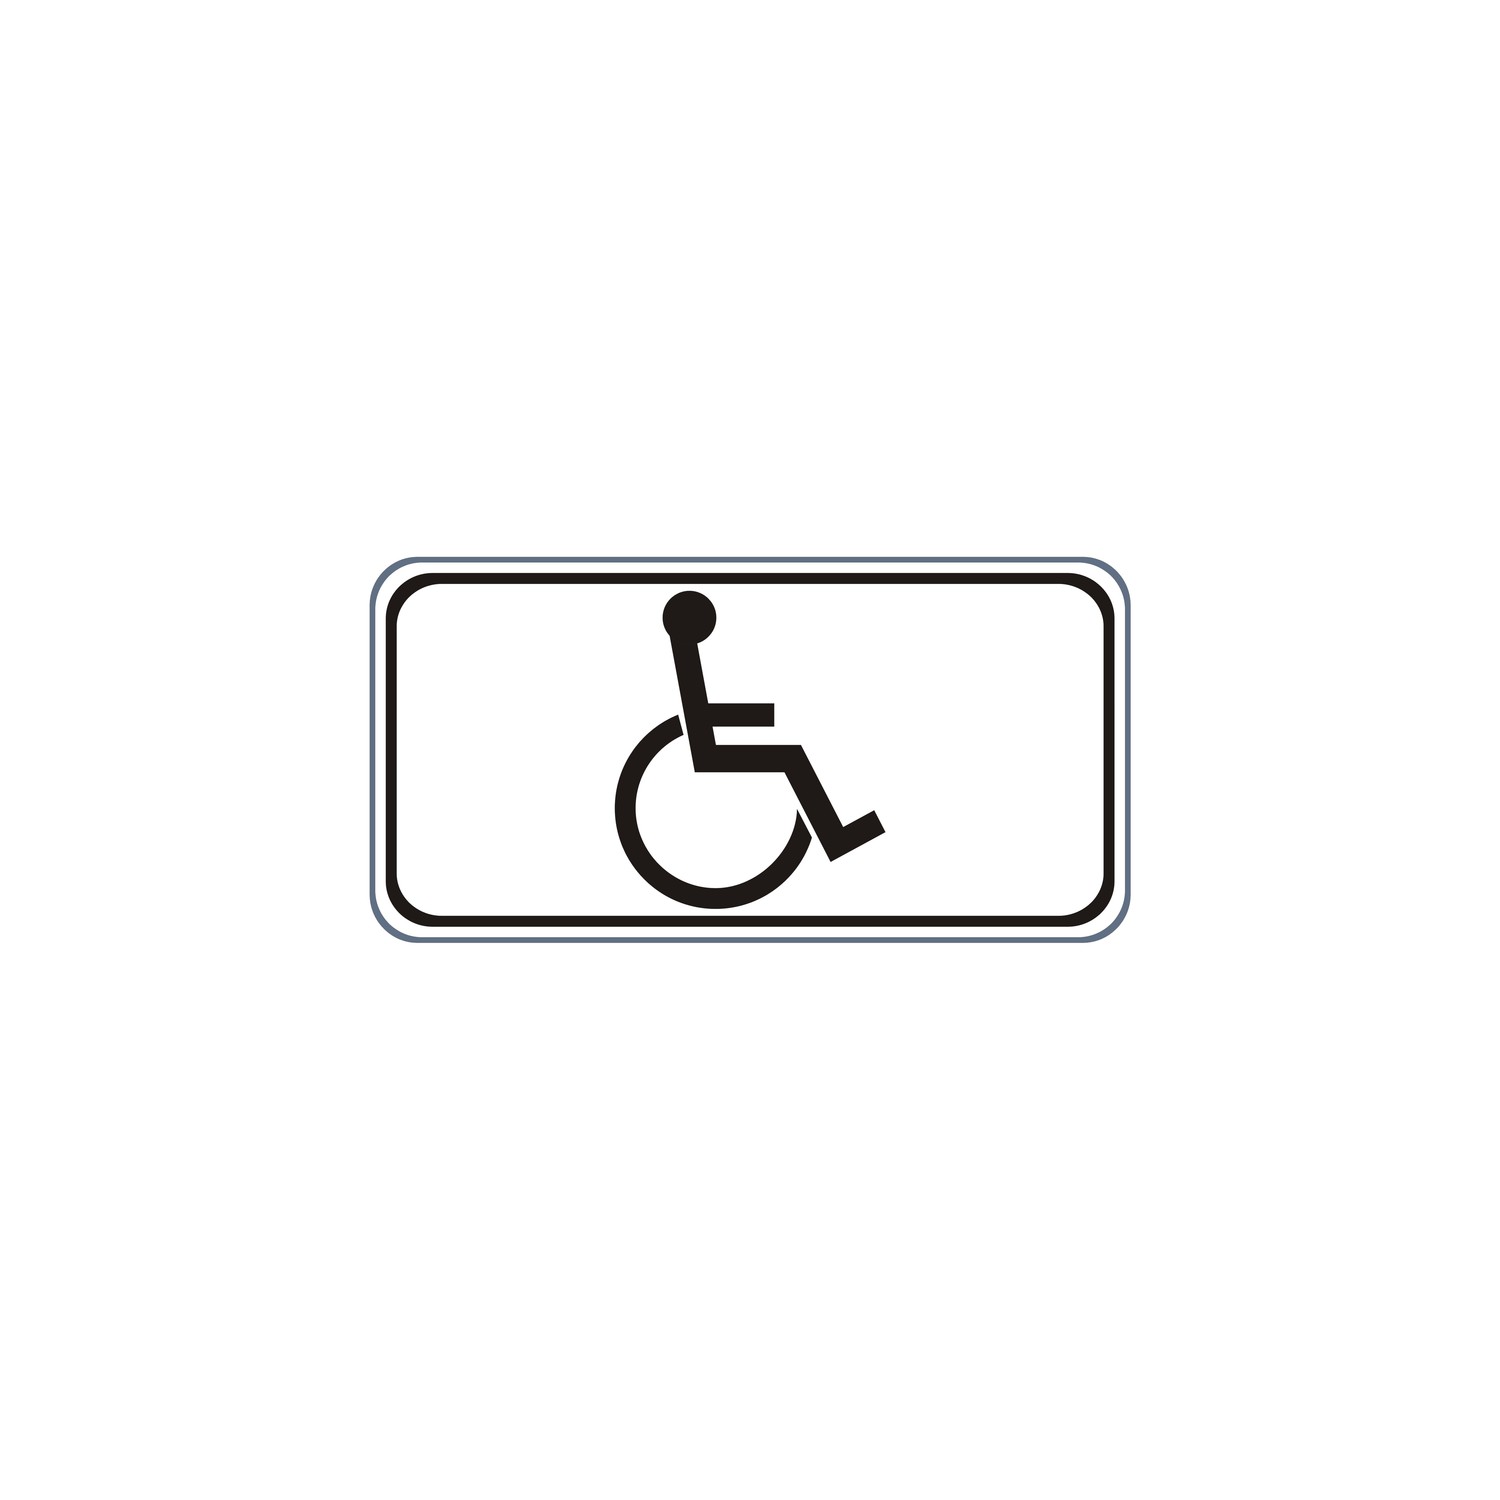 табличка 8.17 "Инвалиды"